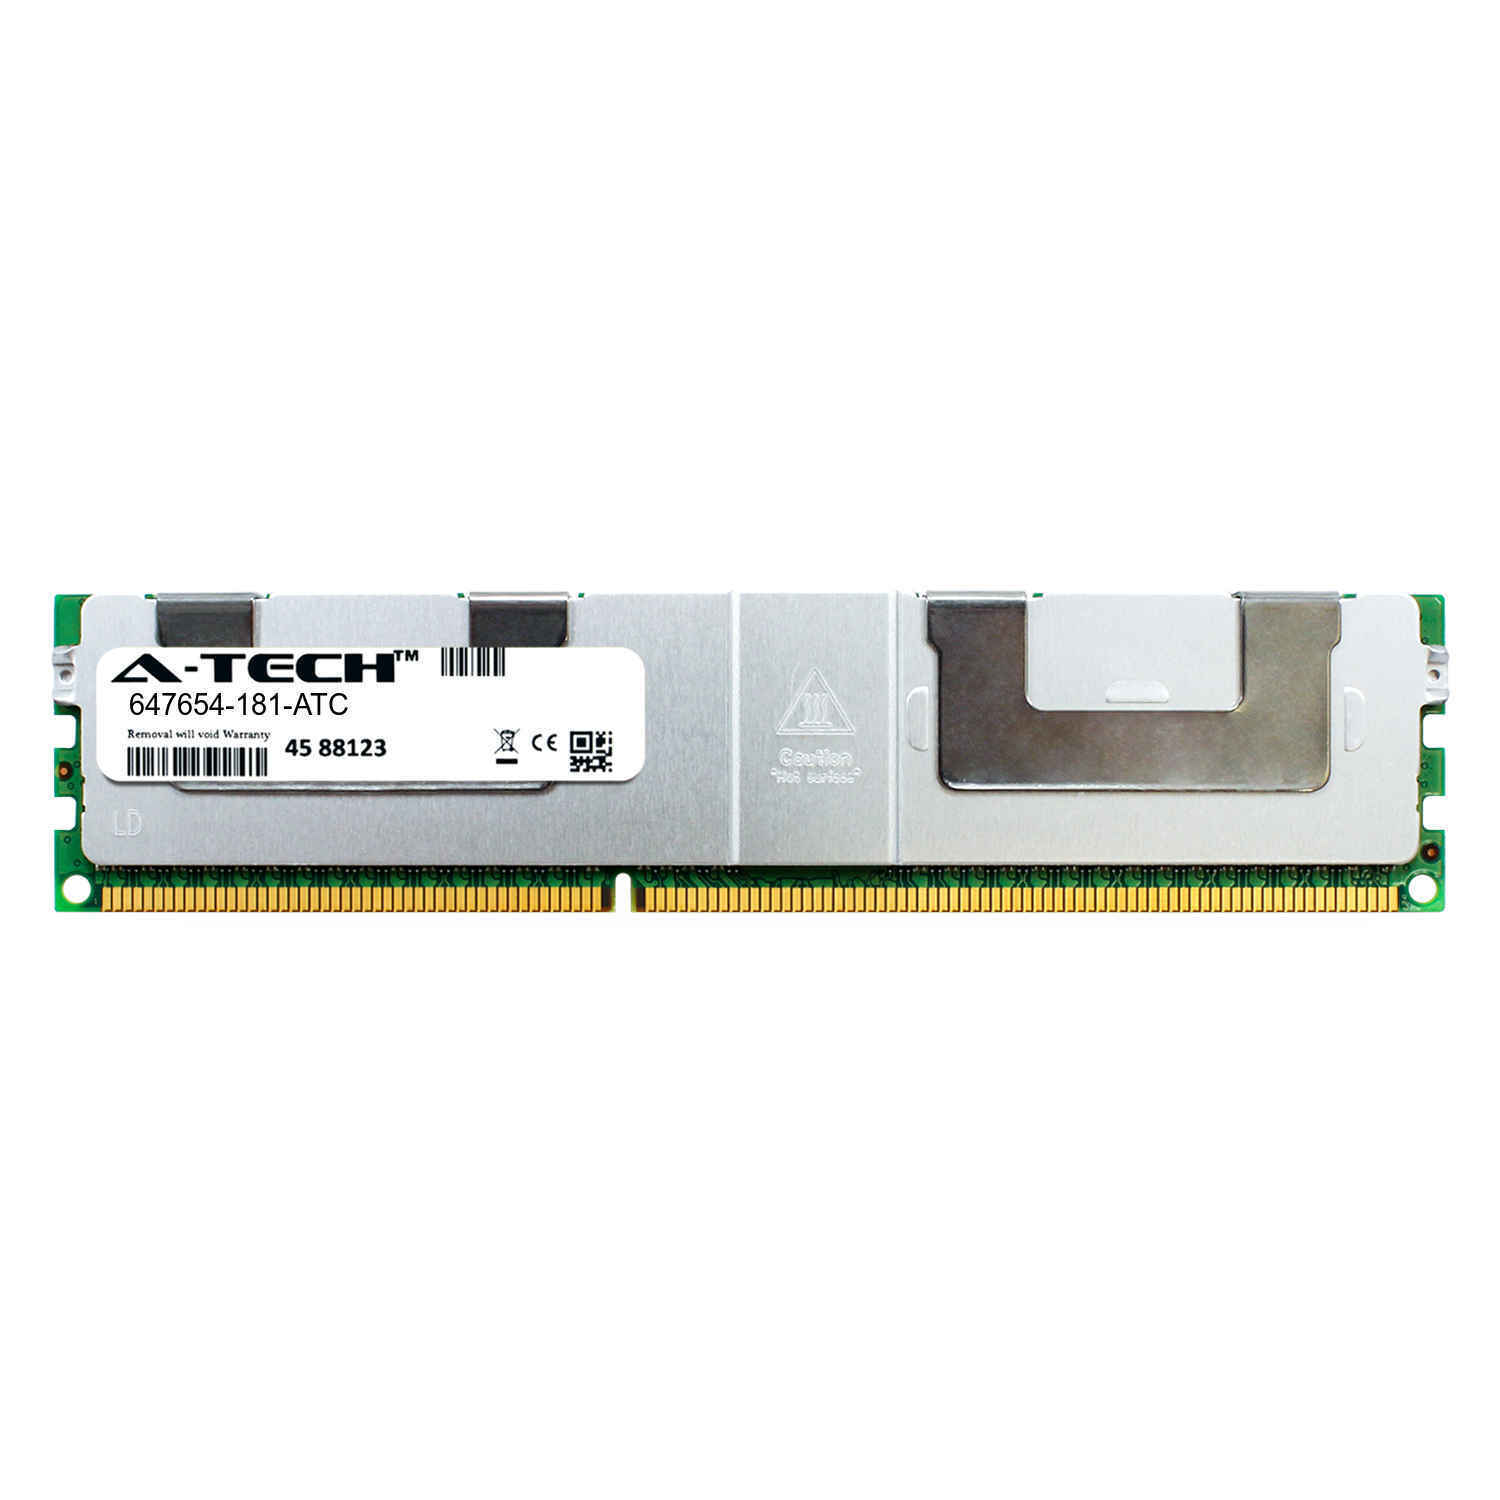 32GB DDR3 PC3-10600L 1333MHz LRDIMM (HP 647654-181 Equivalent) Server Memory RAM